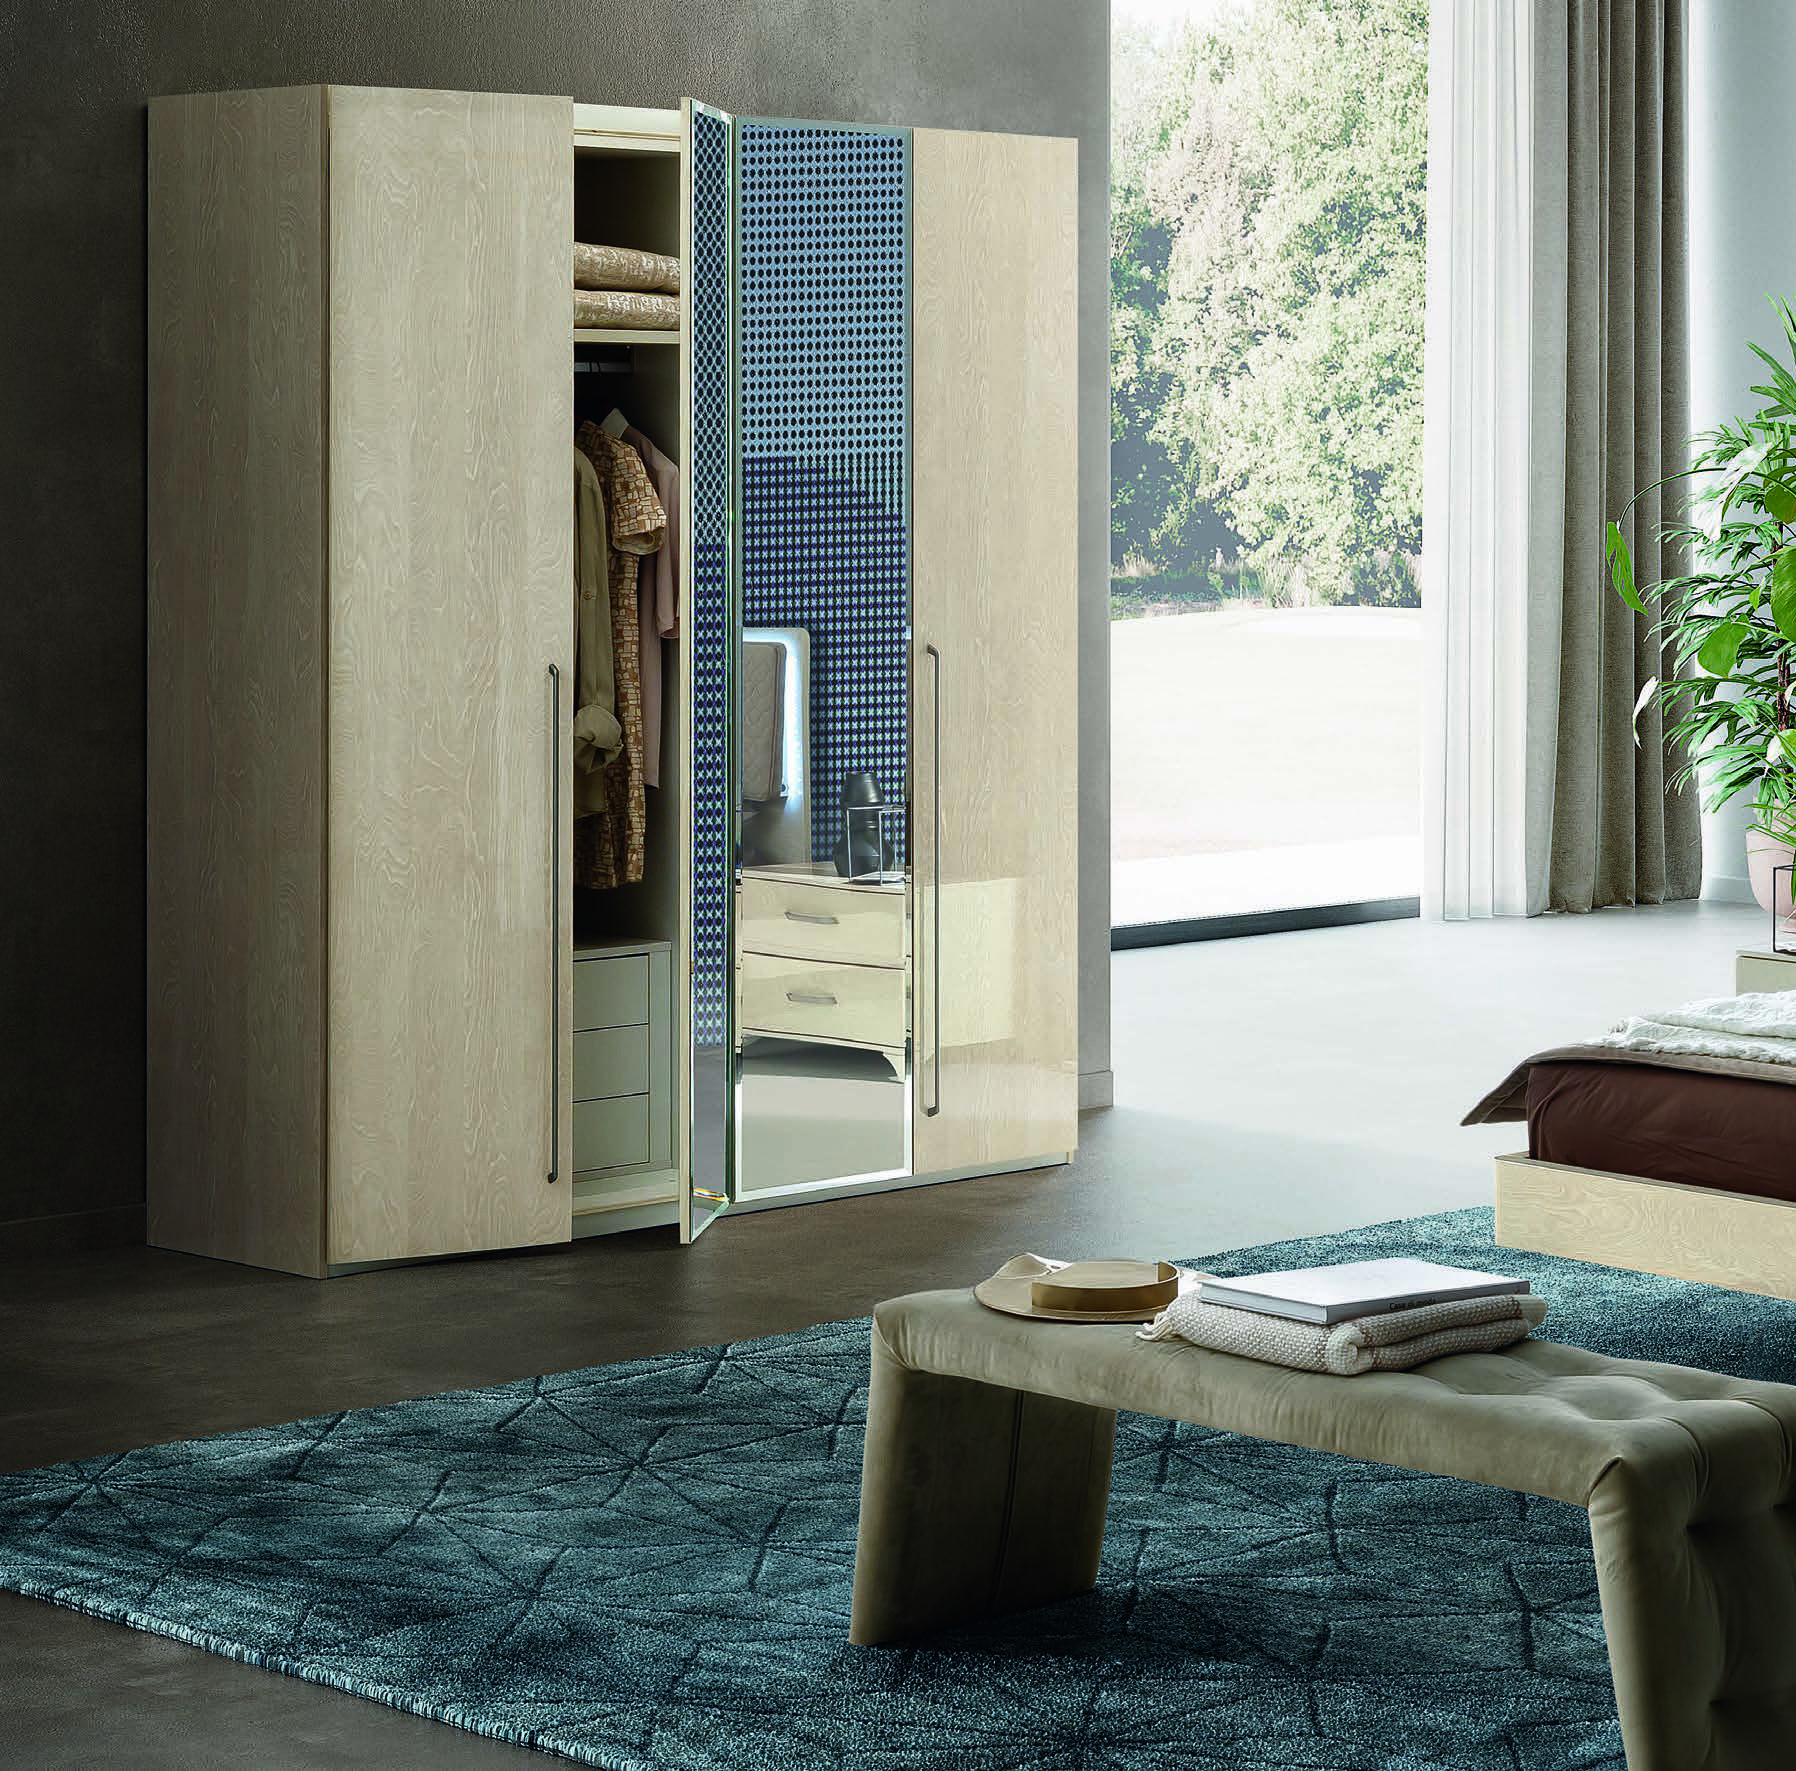 Шкаф платяной Ambra, 3-х дверный, с зеркалом, цвет: янтарная береза, 140x61x228 см (148AR3.04AV)148AR3.04AV